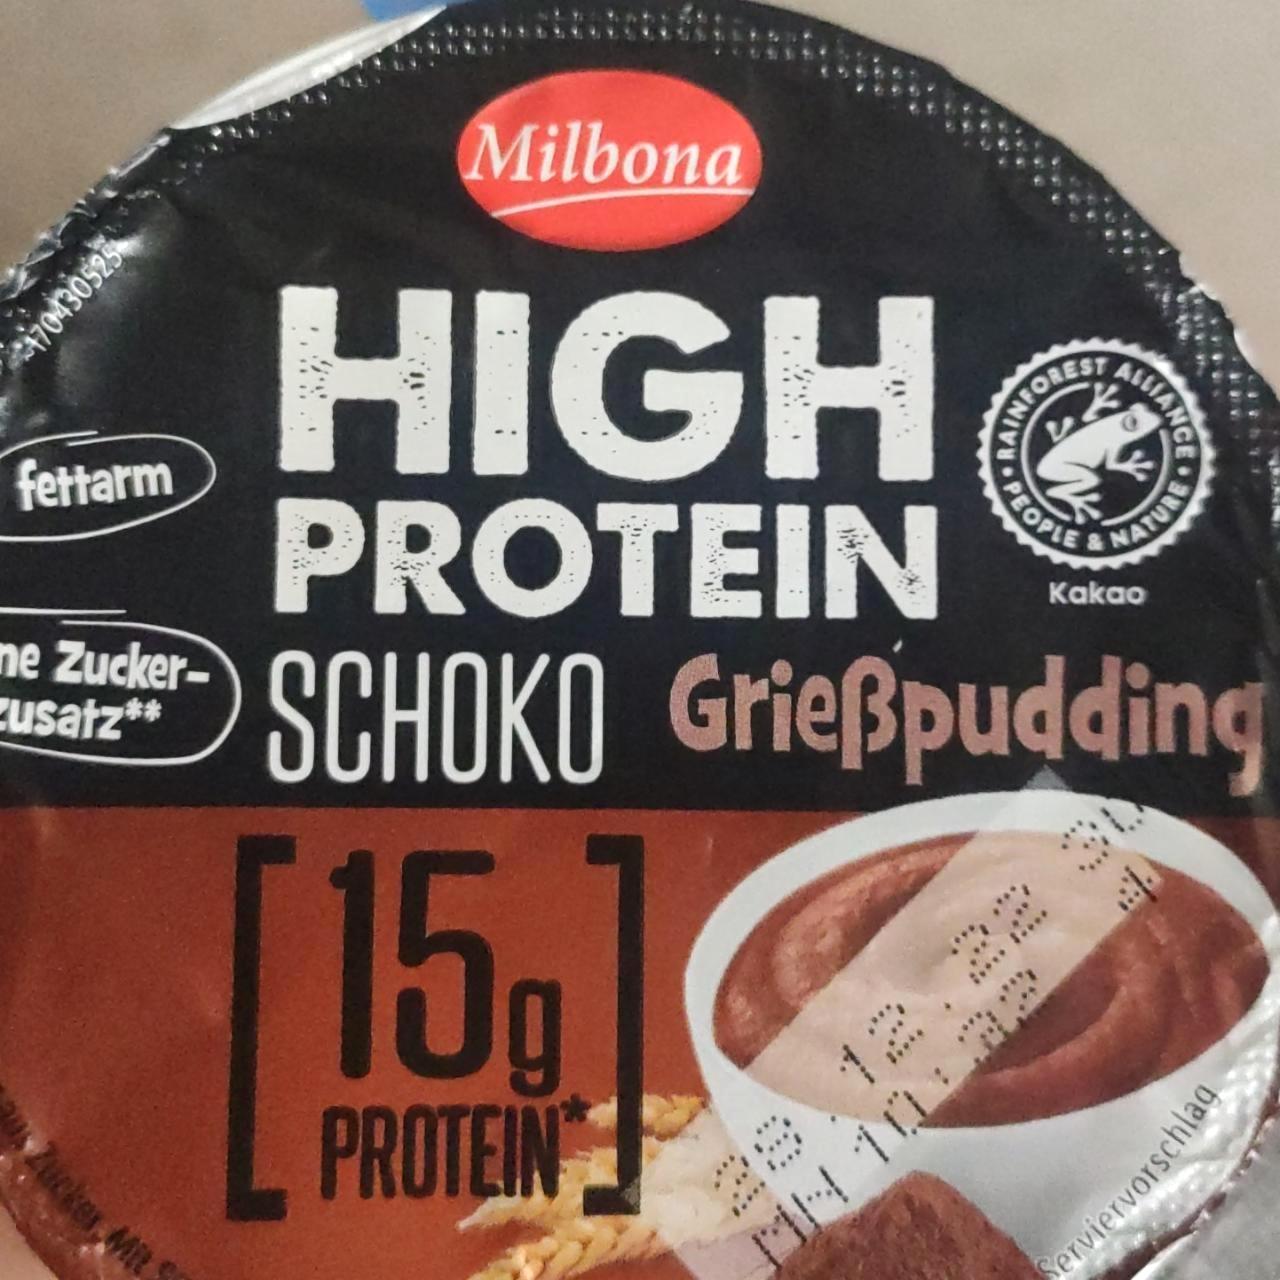 Képek - High protein schoko grießpudding Milbona